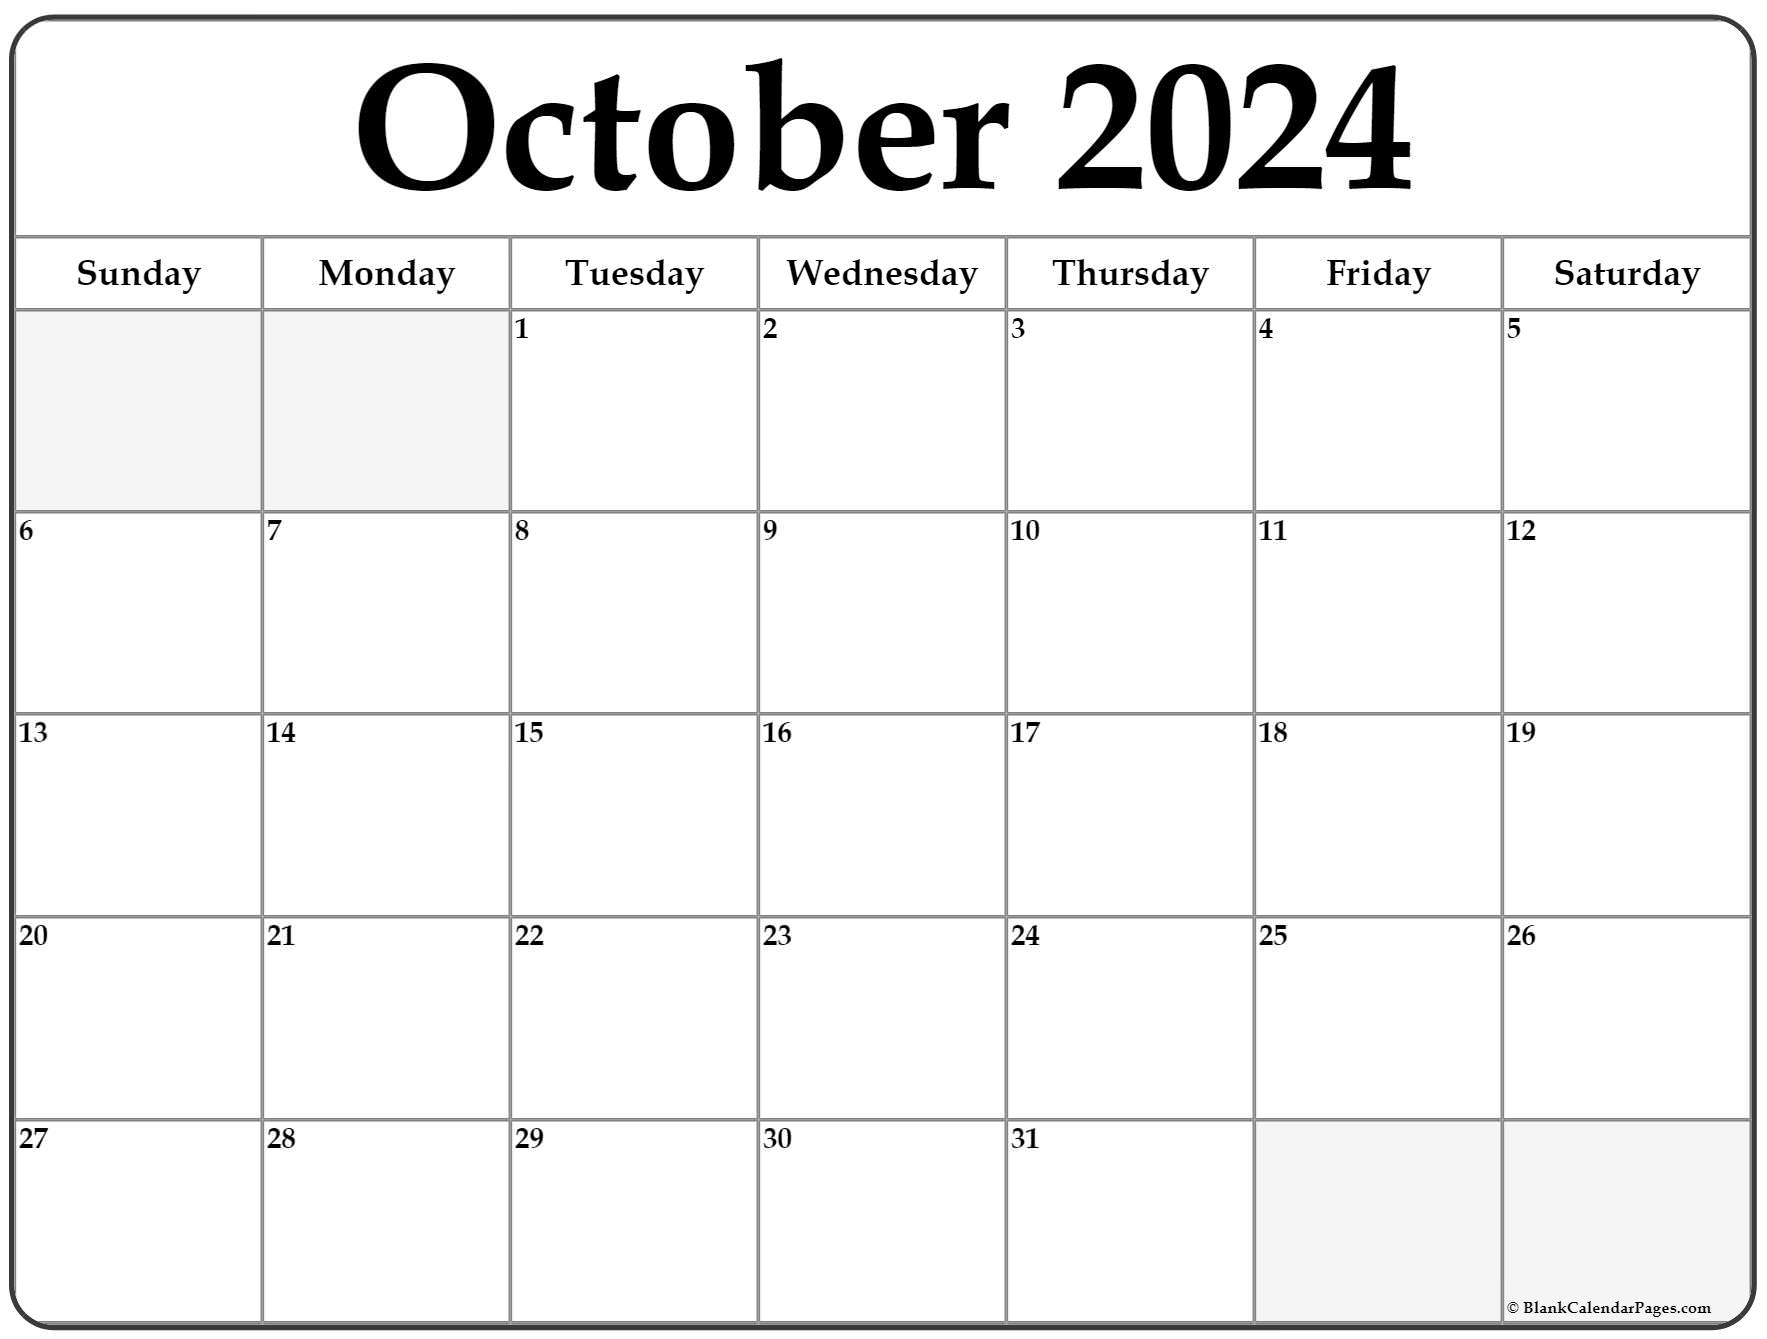 October 2022 calendar | free printable monthly calendars